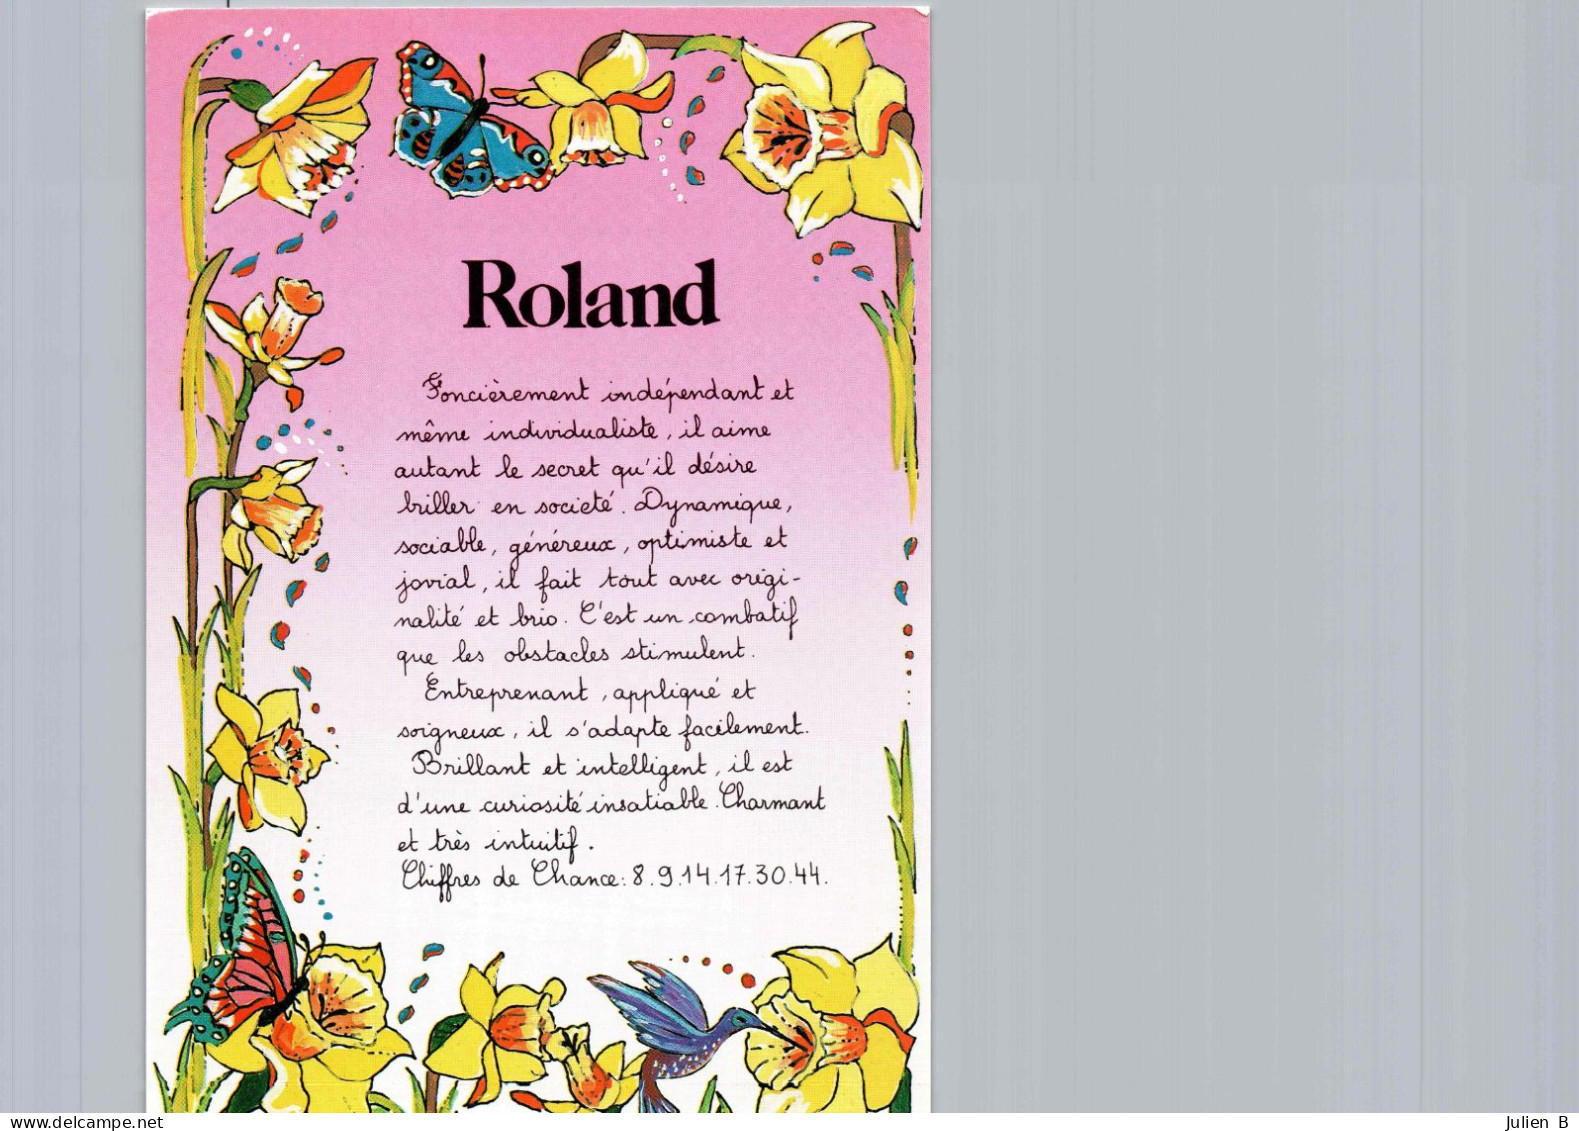 Roland, Edition André Barthelemy - Voornamen